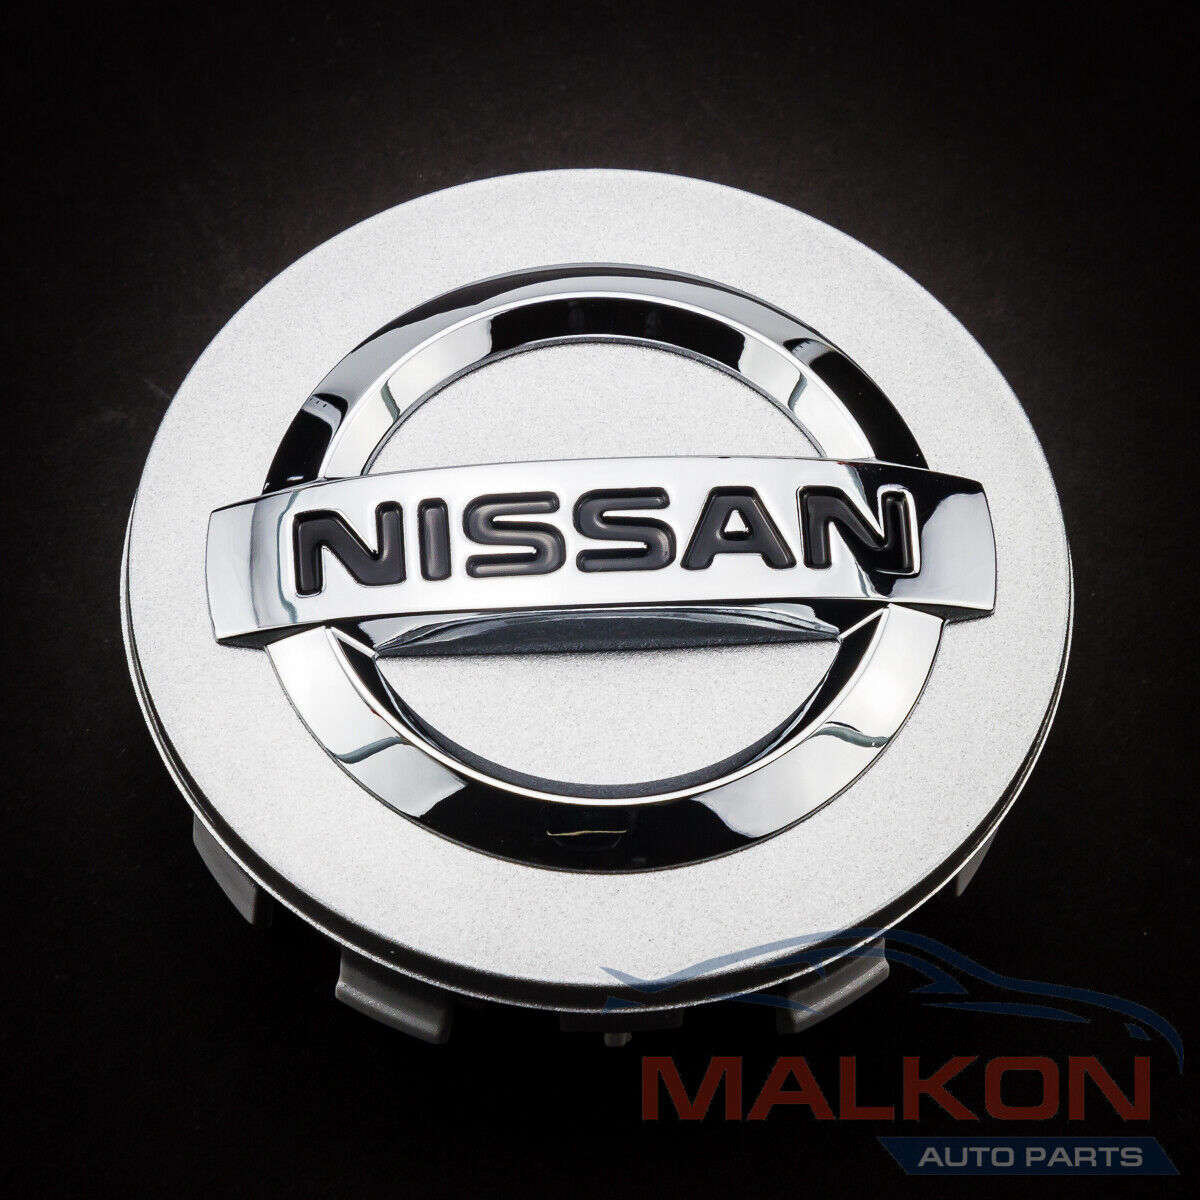 Nissan Logo Wallpapers